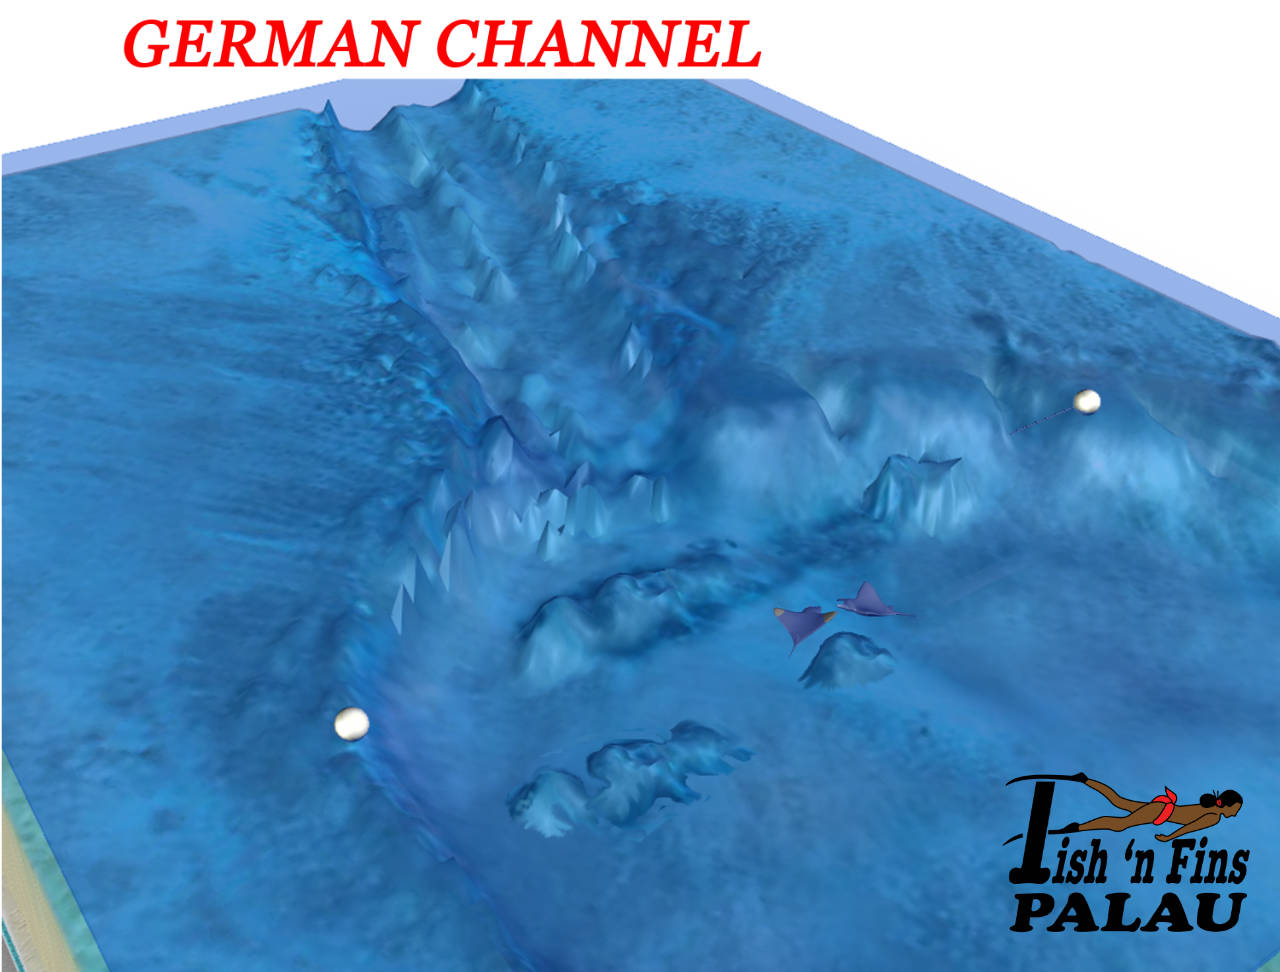 German Channel Palau InfoGraphic